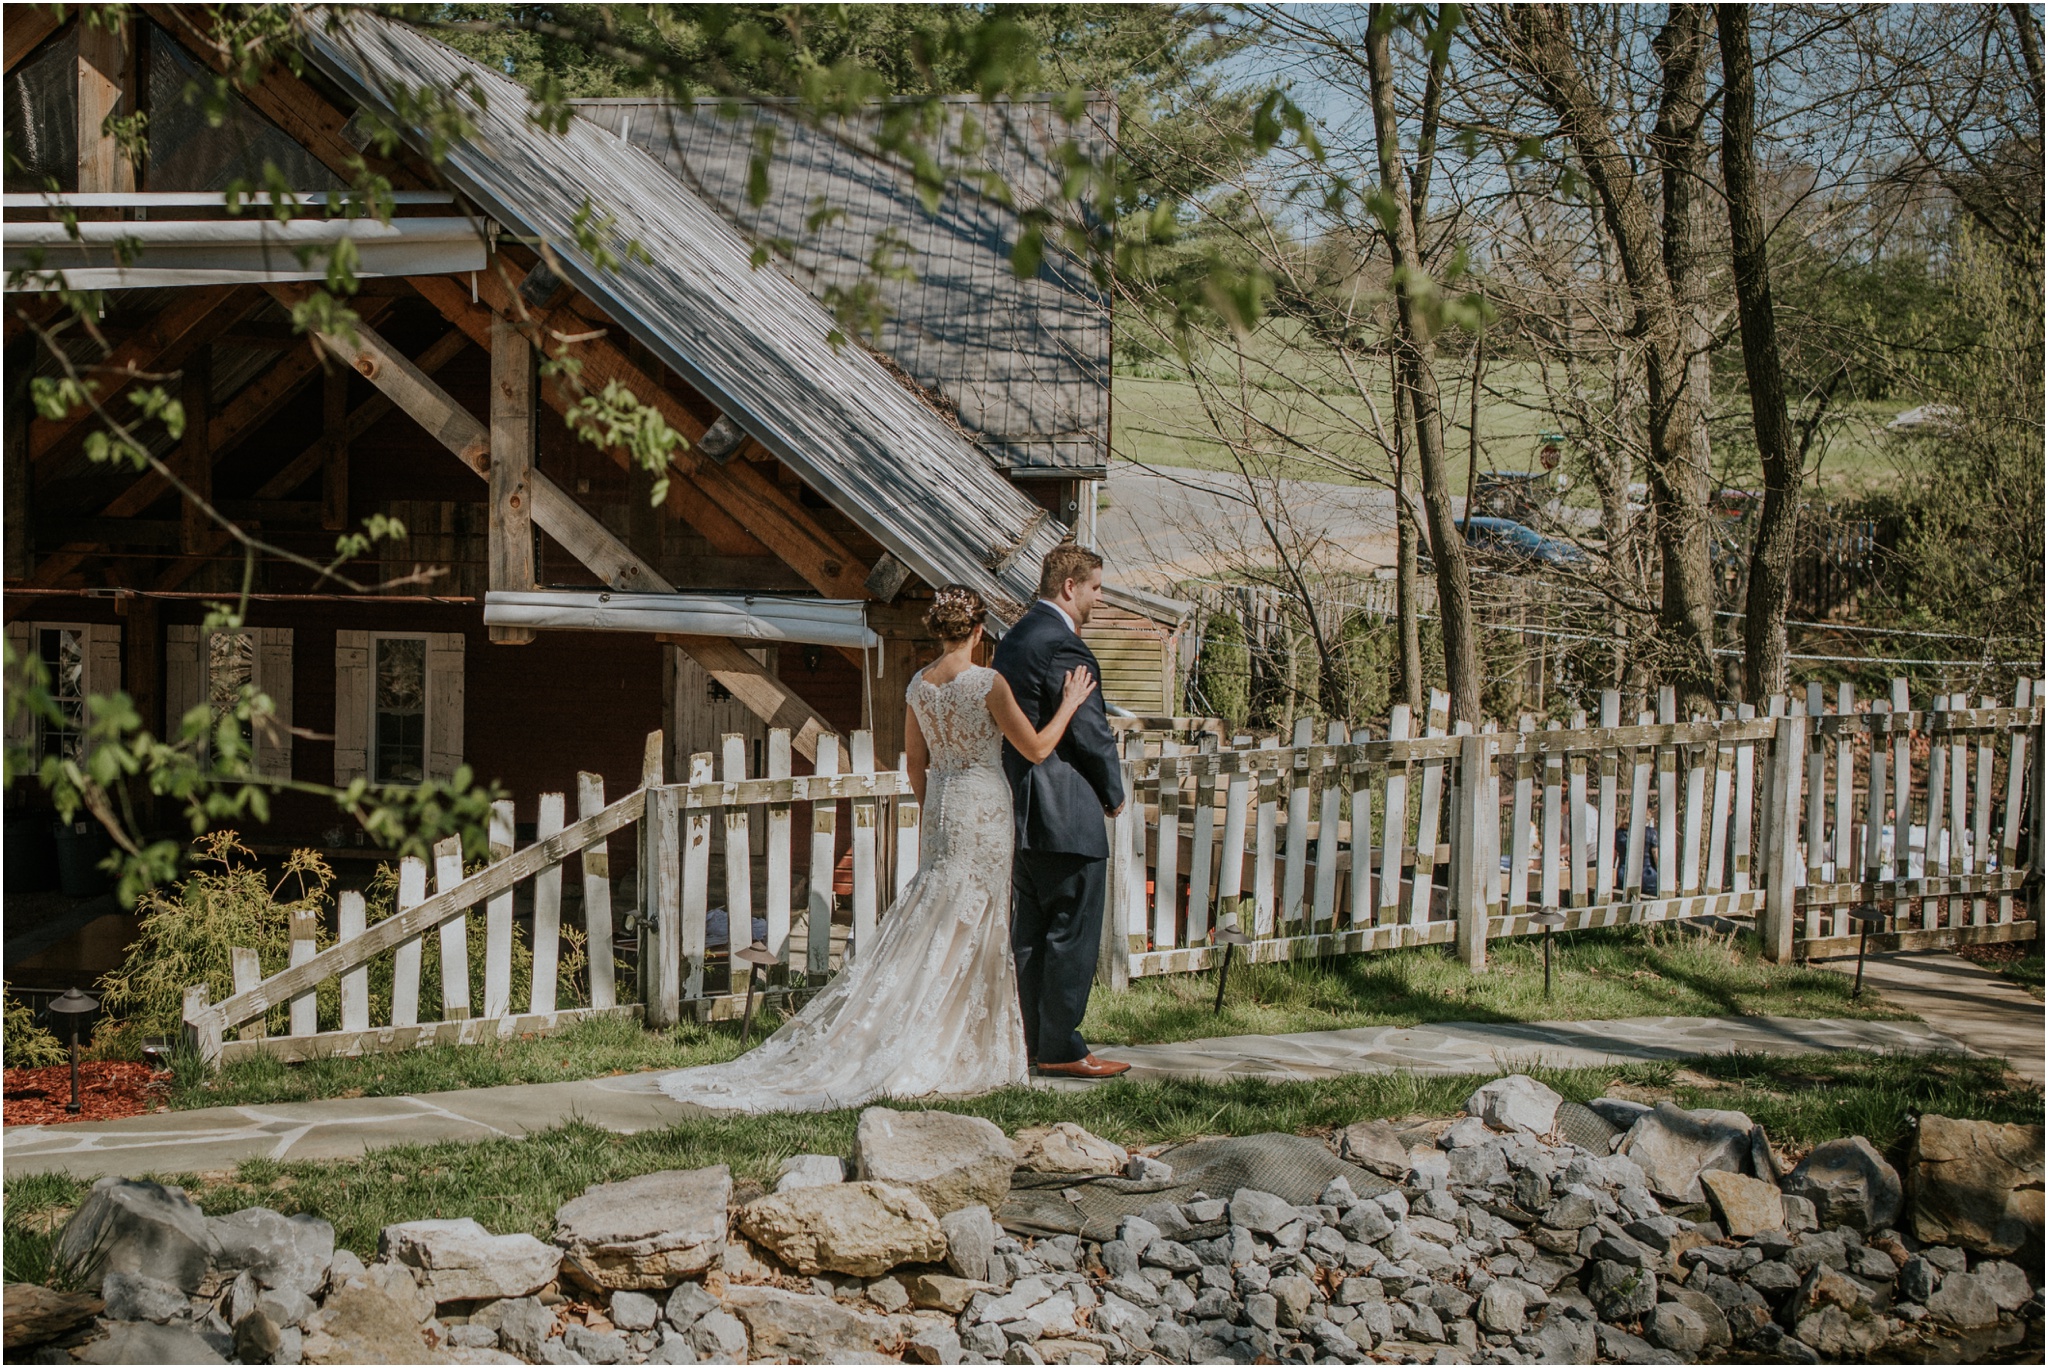 millstone-limestone-tn-tennessee-rustic-outdoors-pastel-lodge-cabin-venue-wedding-katy-sergent-photographer_0042.jpg